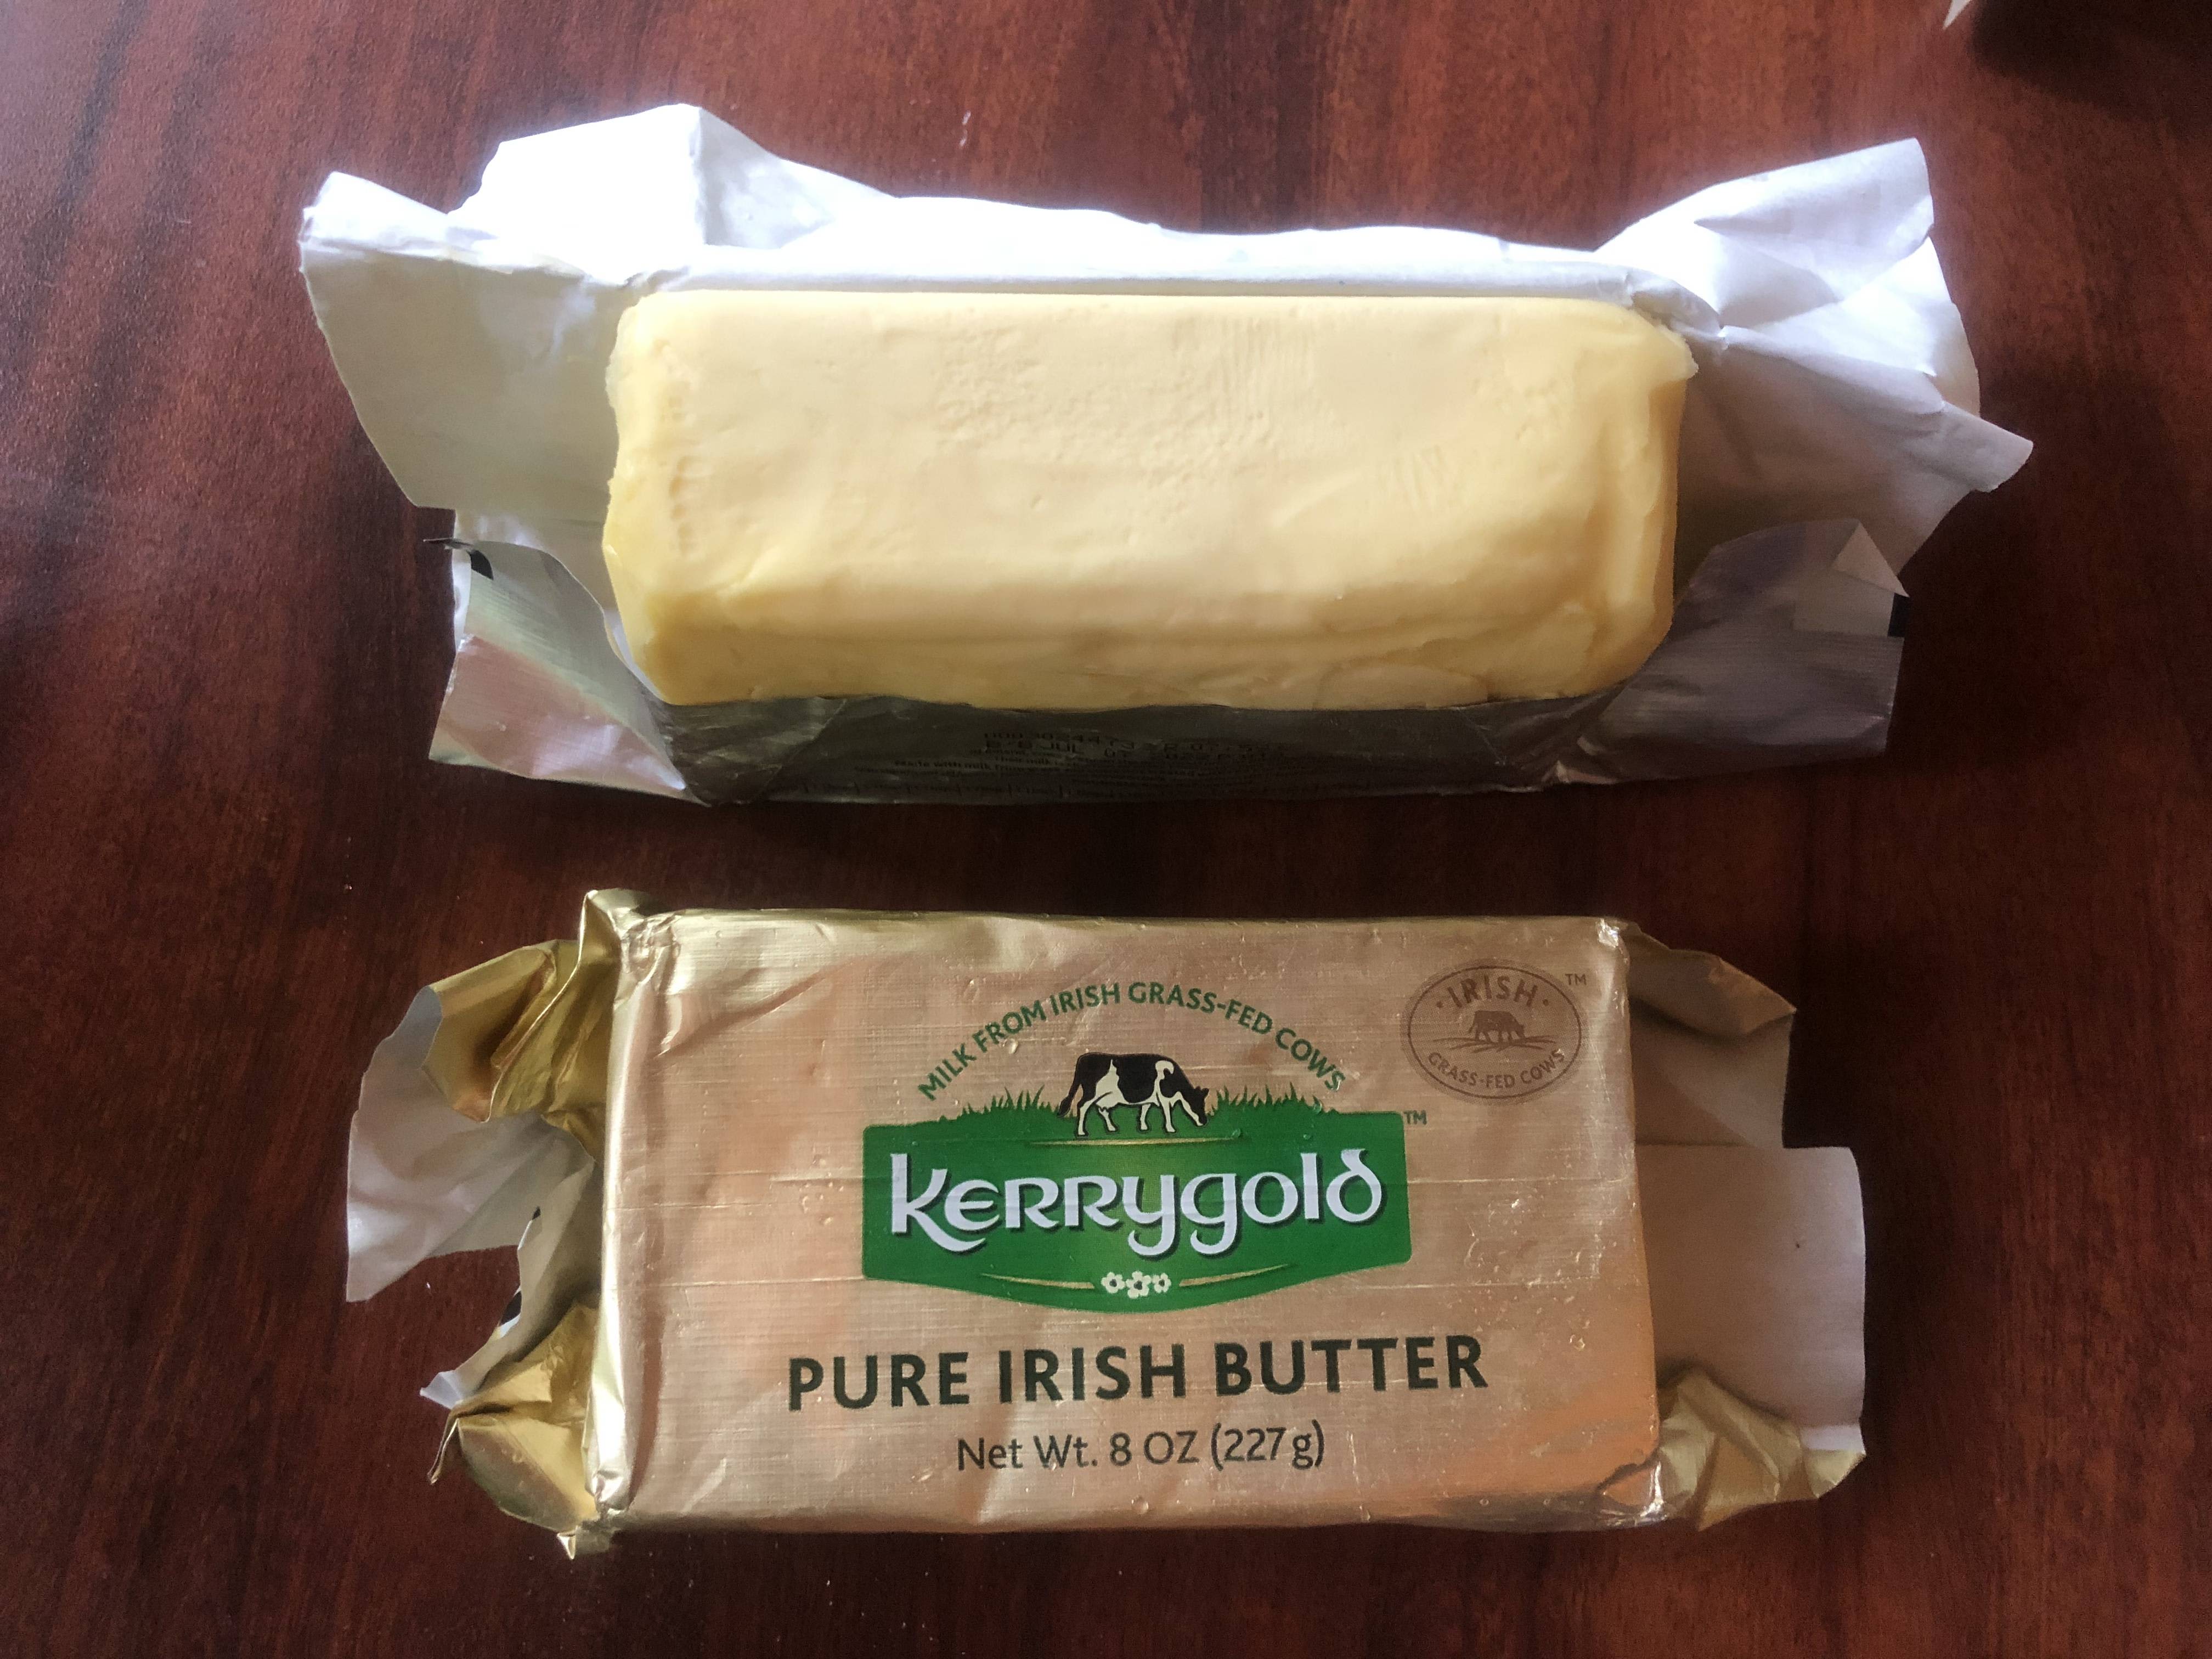 Mainland BUTTERSOFT Pure Spreadable Butter reviews